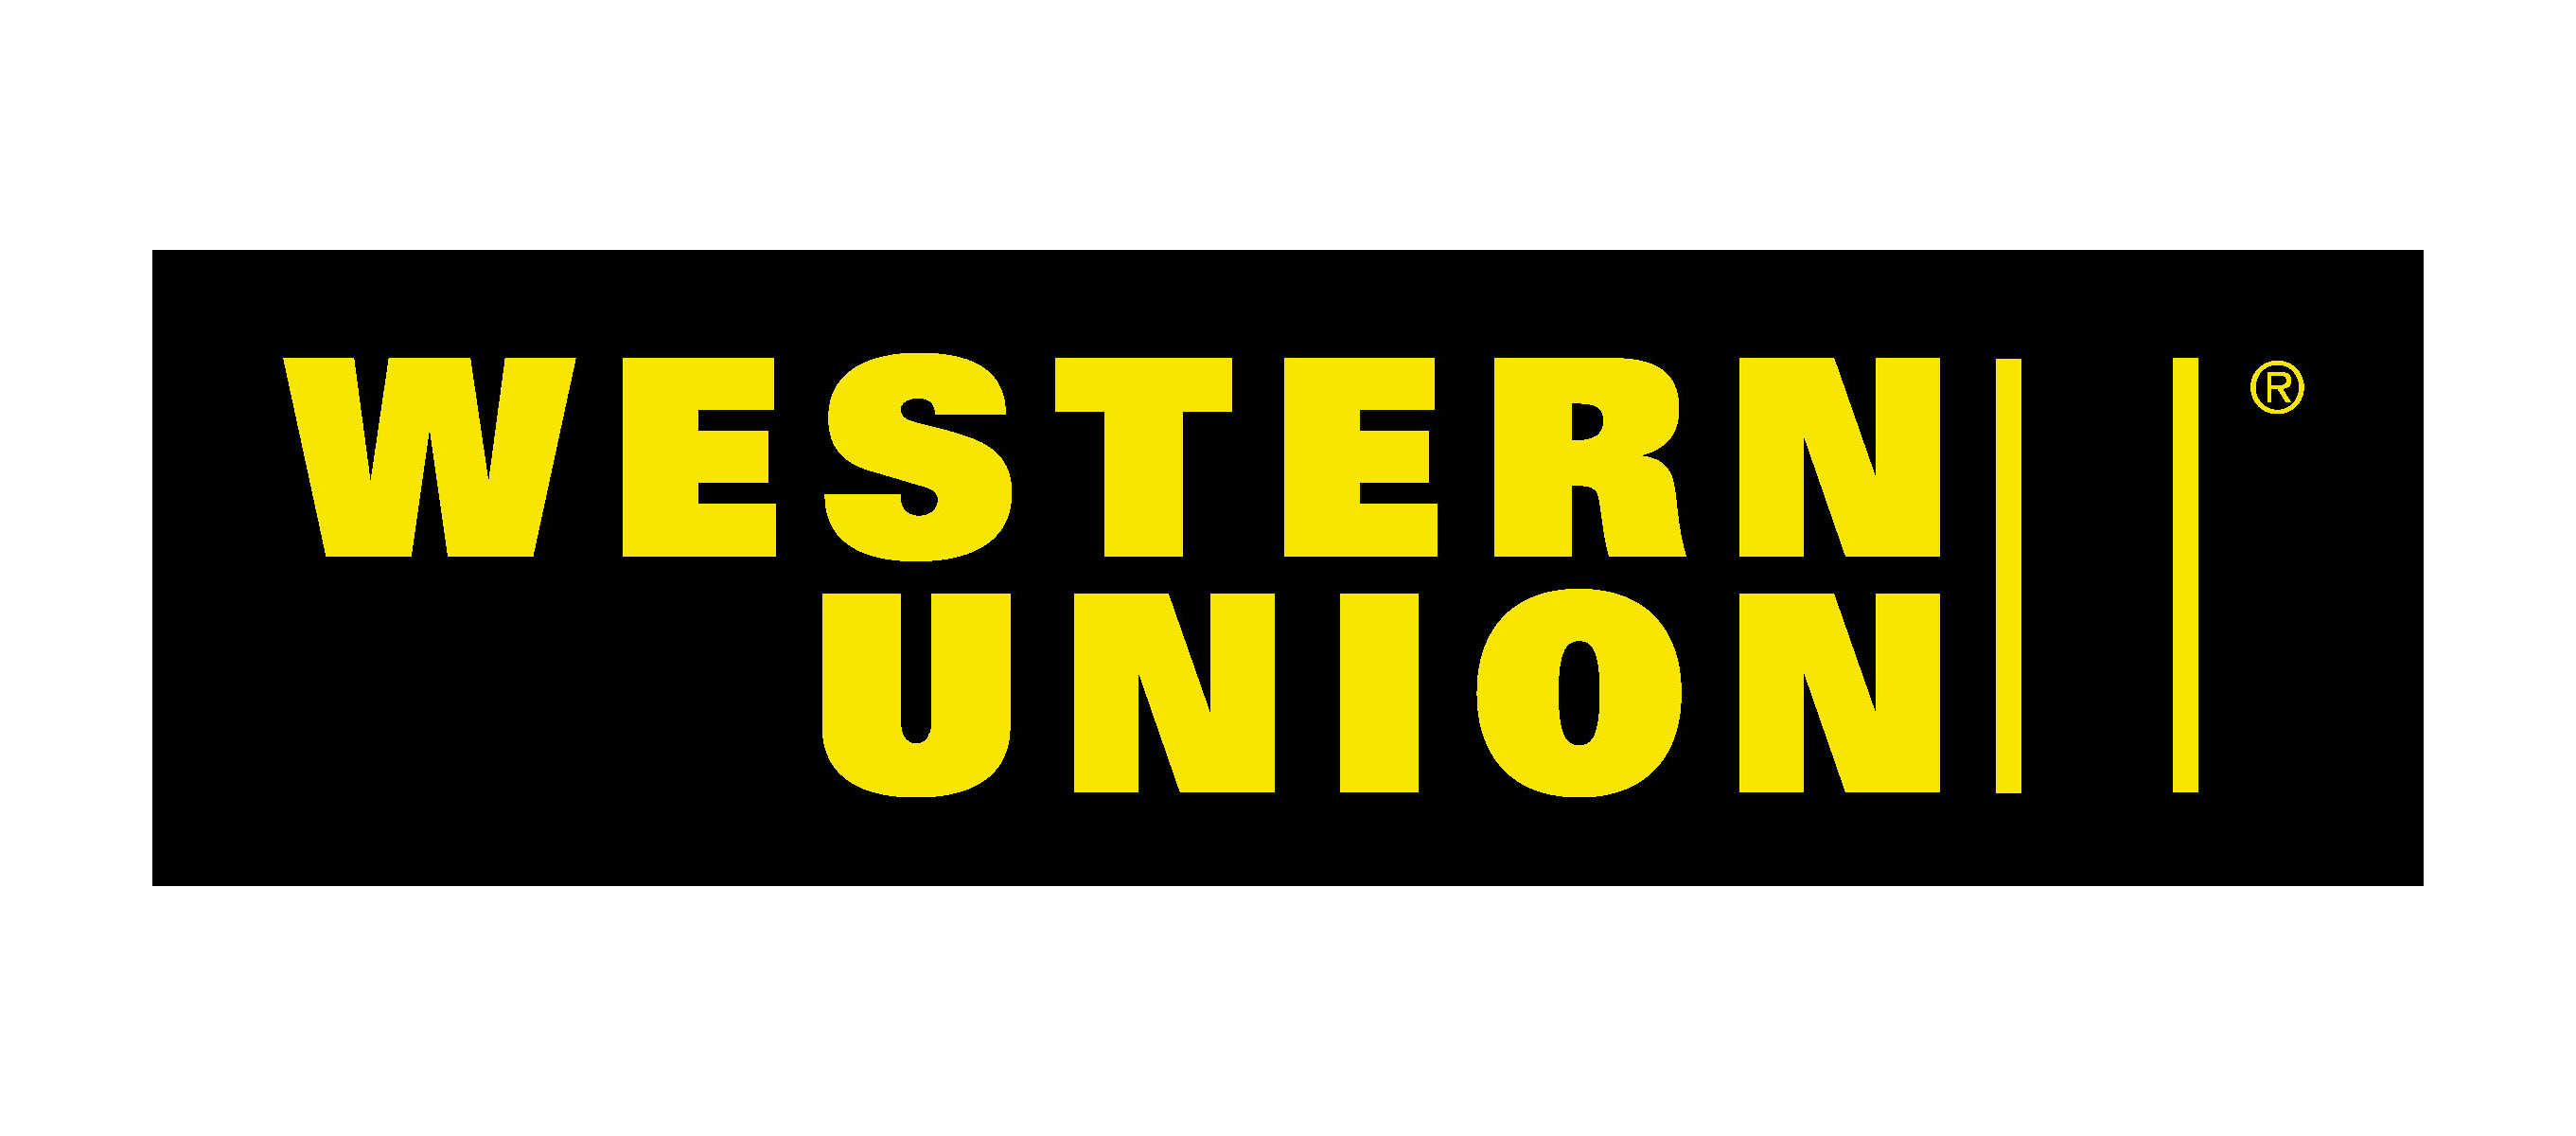 Westernunion Logo - Western-Union-logo - Welcoming Interactive